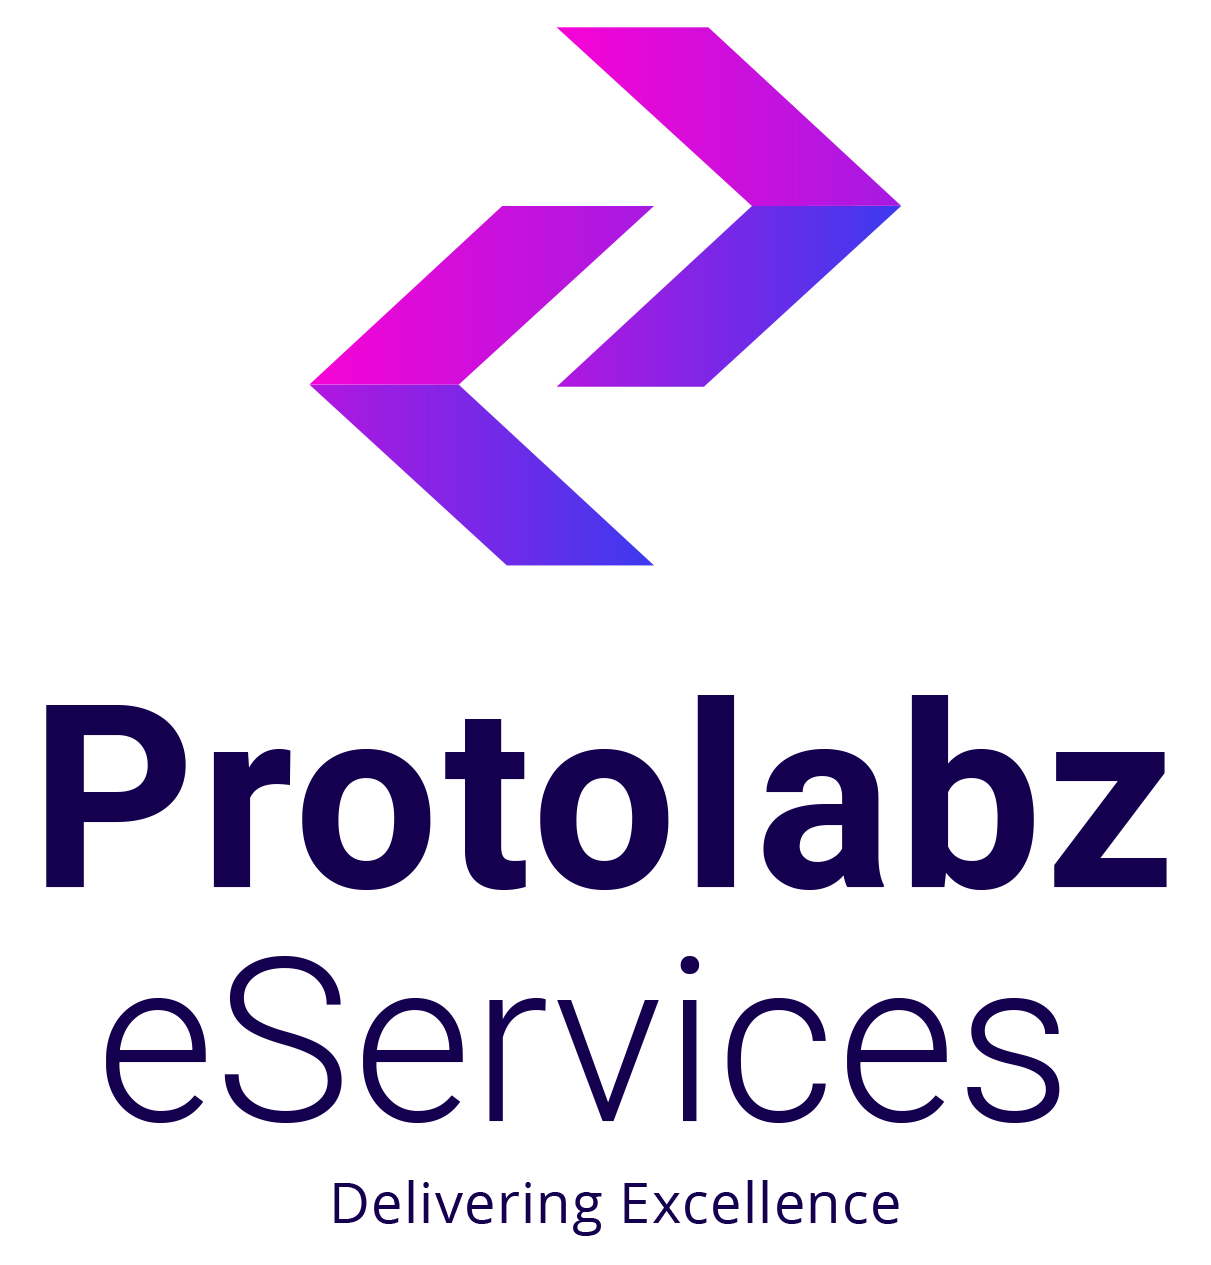 Protolabz eServices